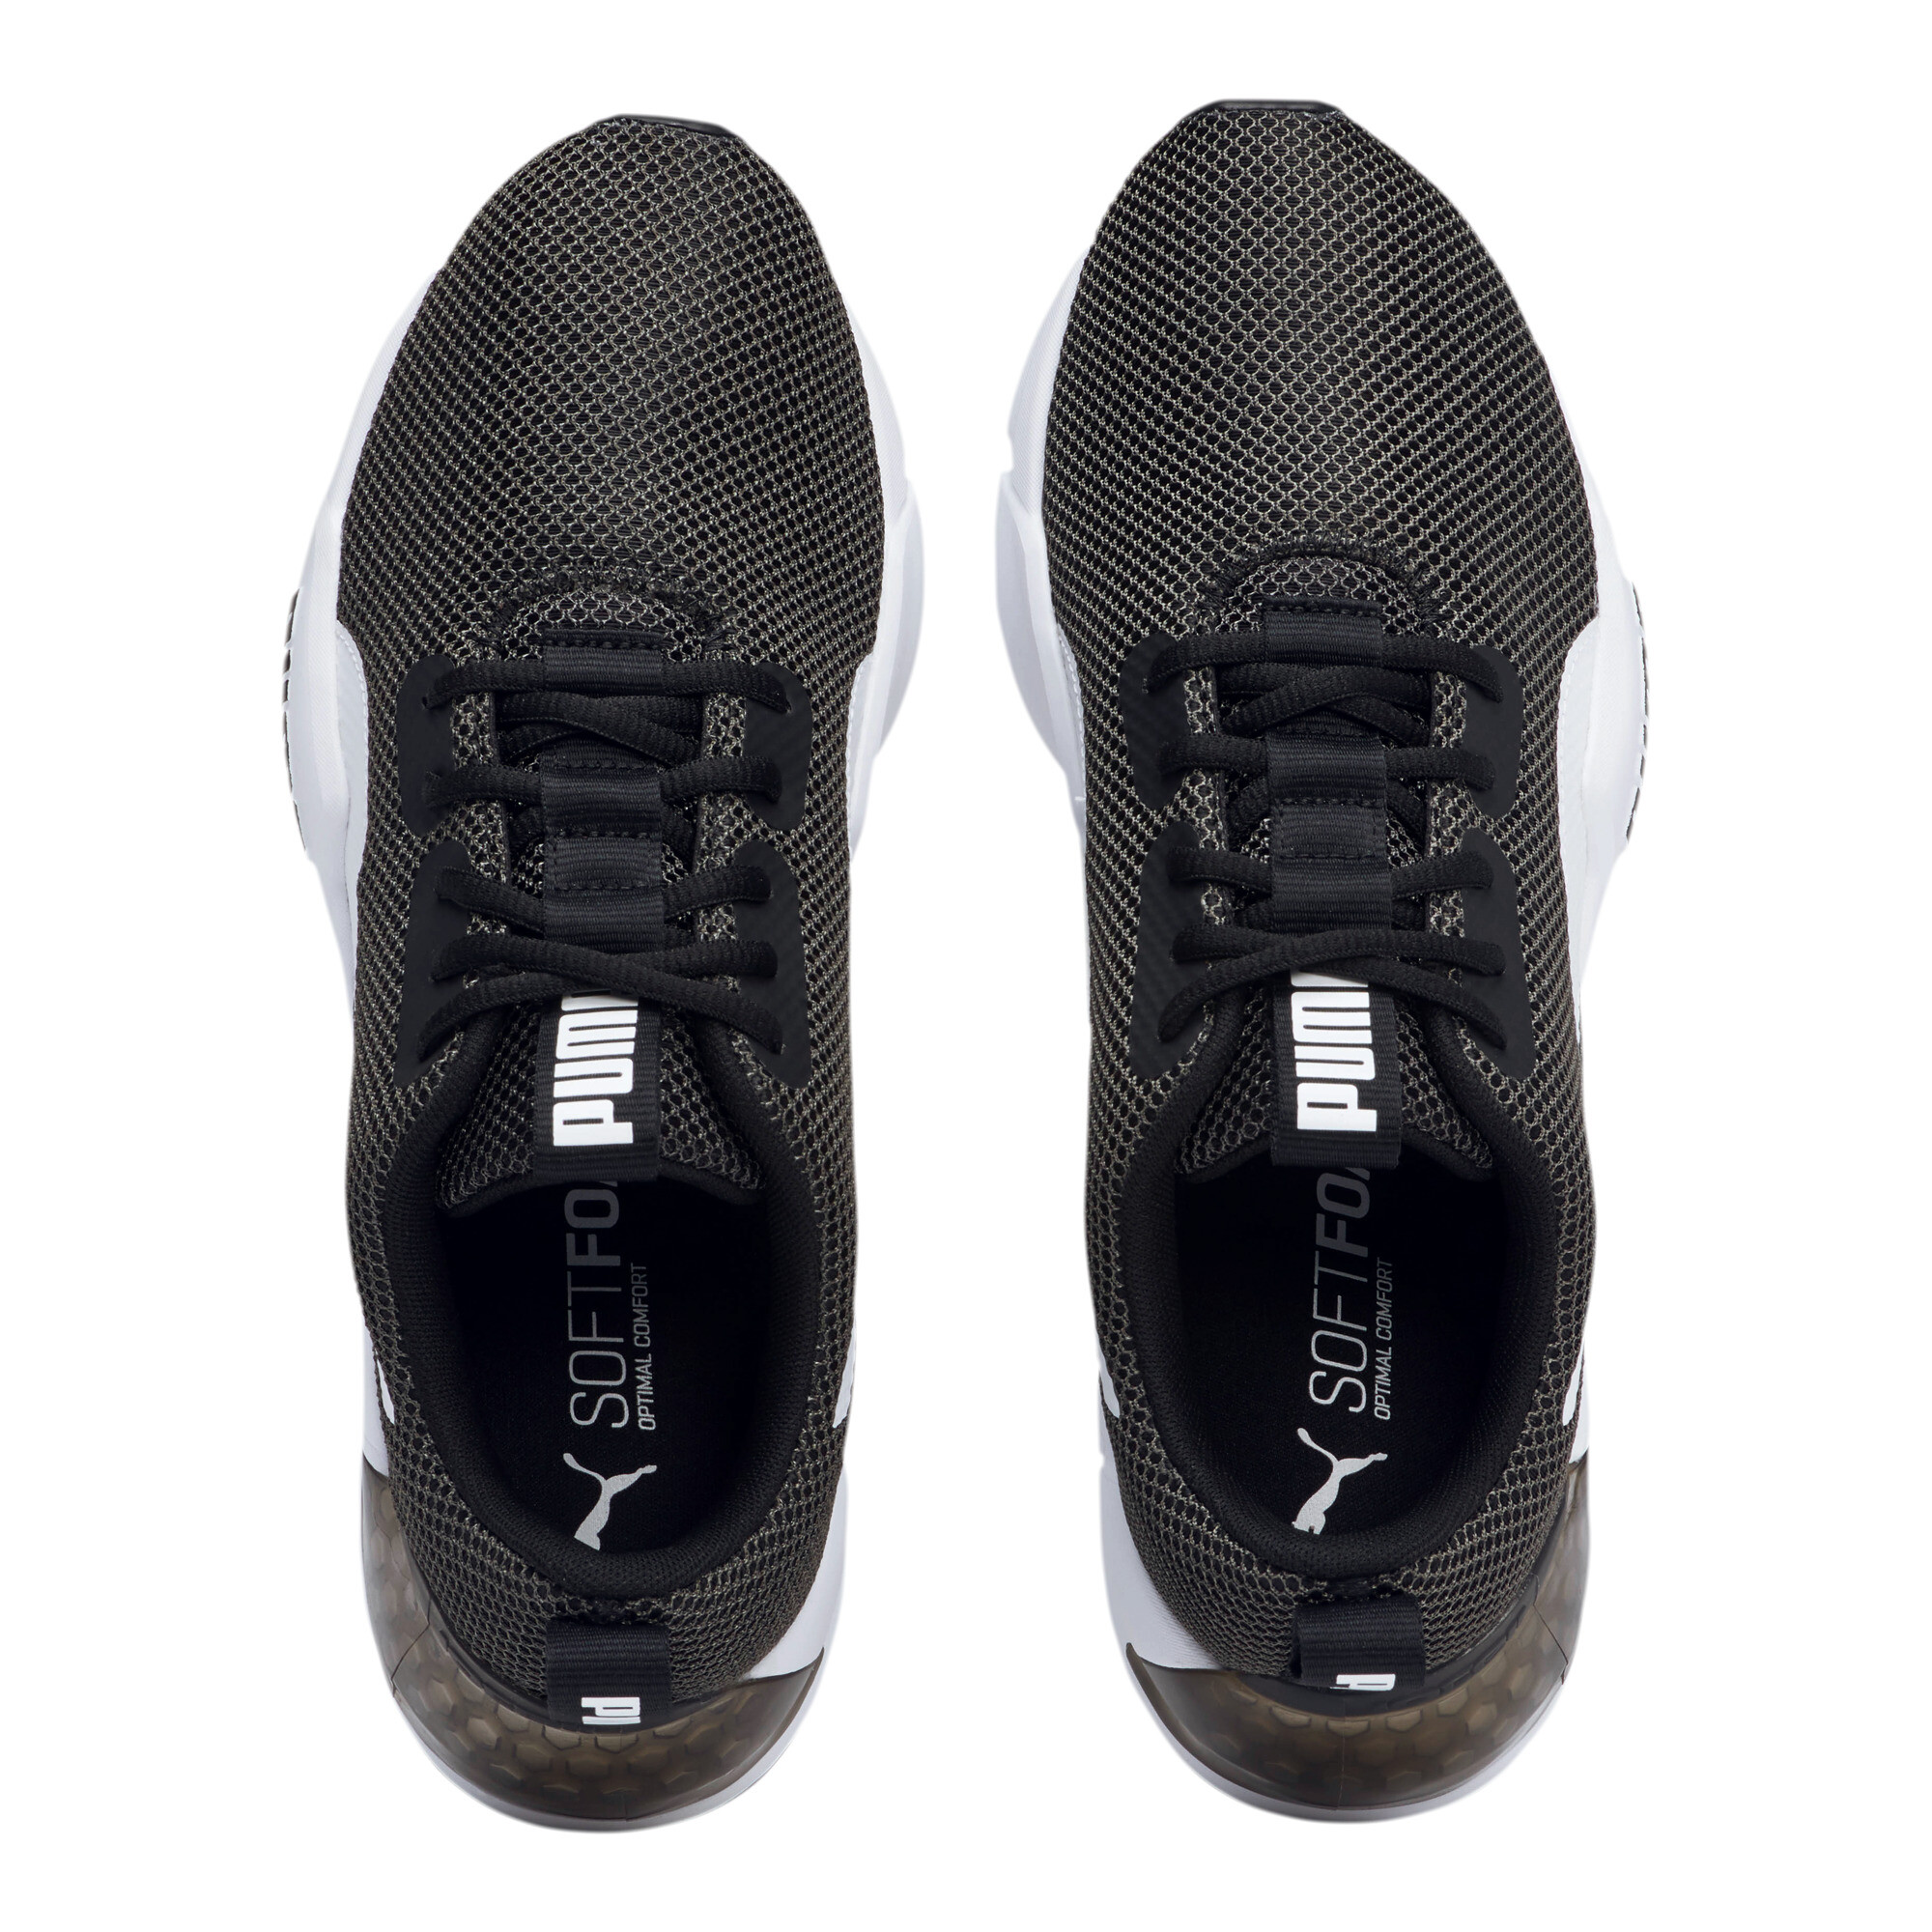 PUMA CELL Vorto Training Shoes Men Shoe Running | eBay